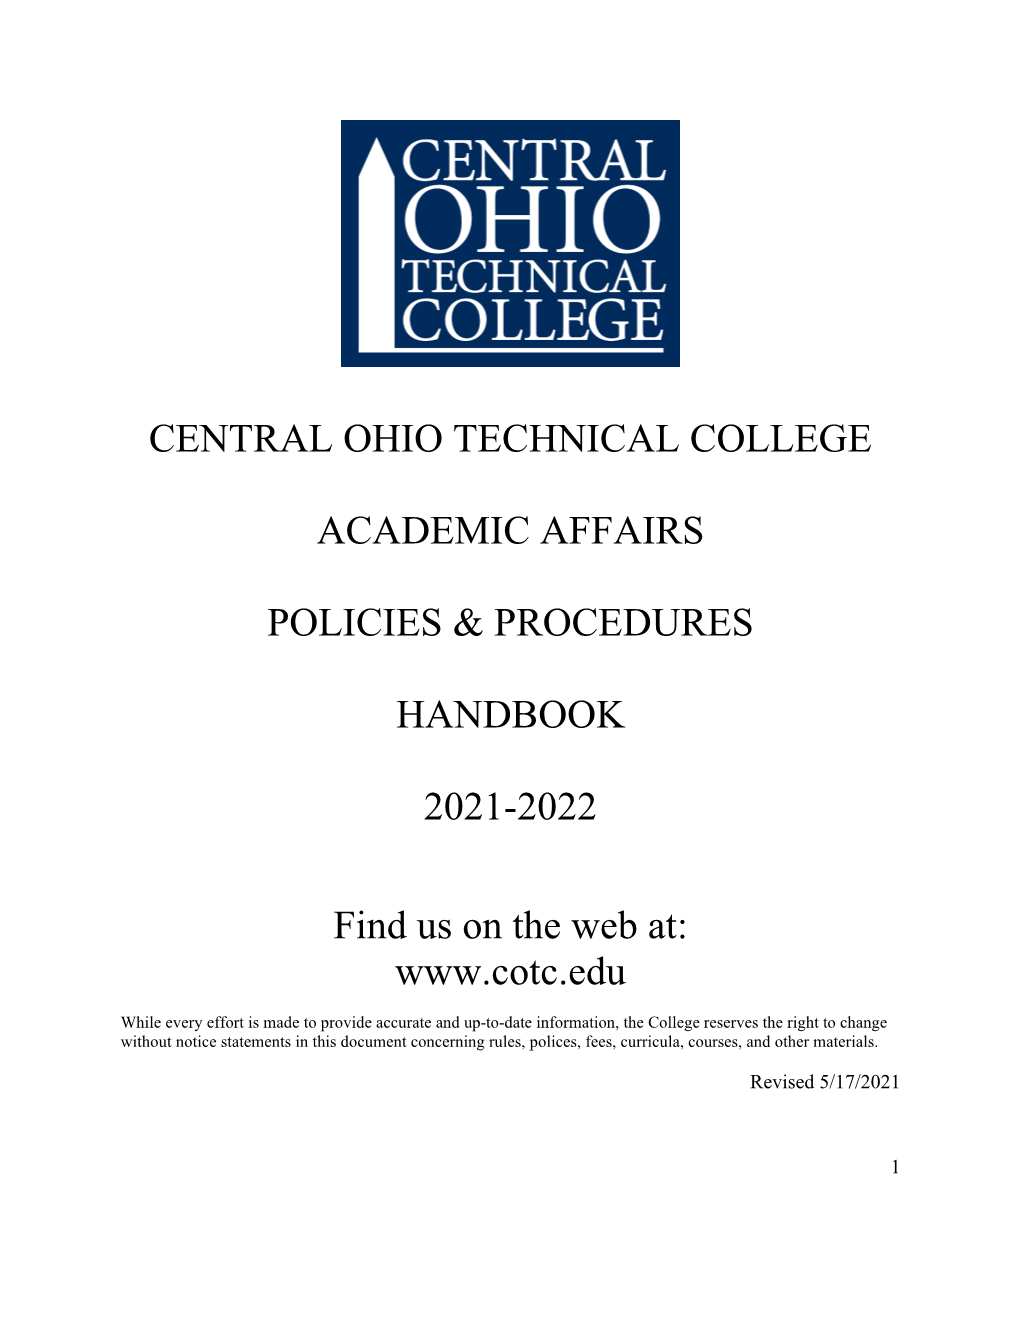 Central Ohio Technical College Academic Affairs